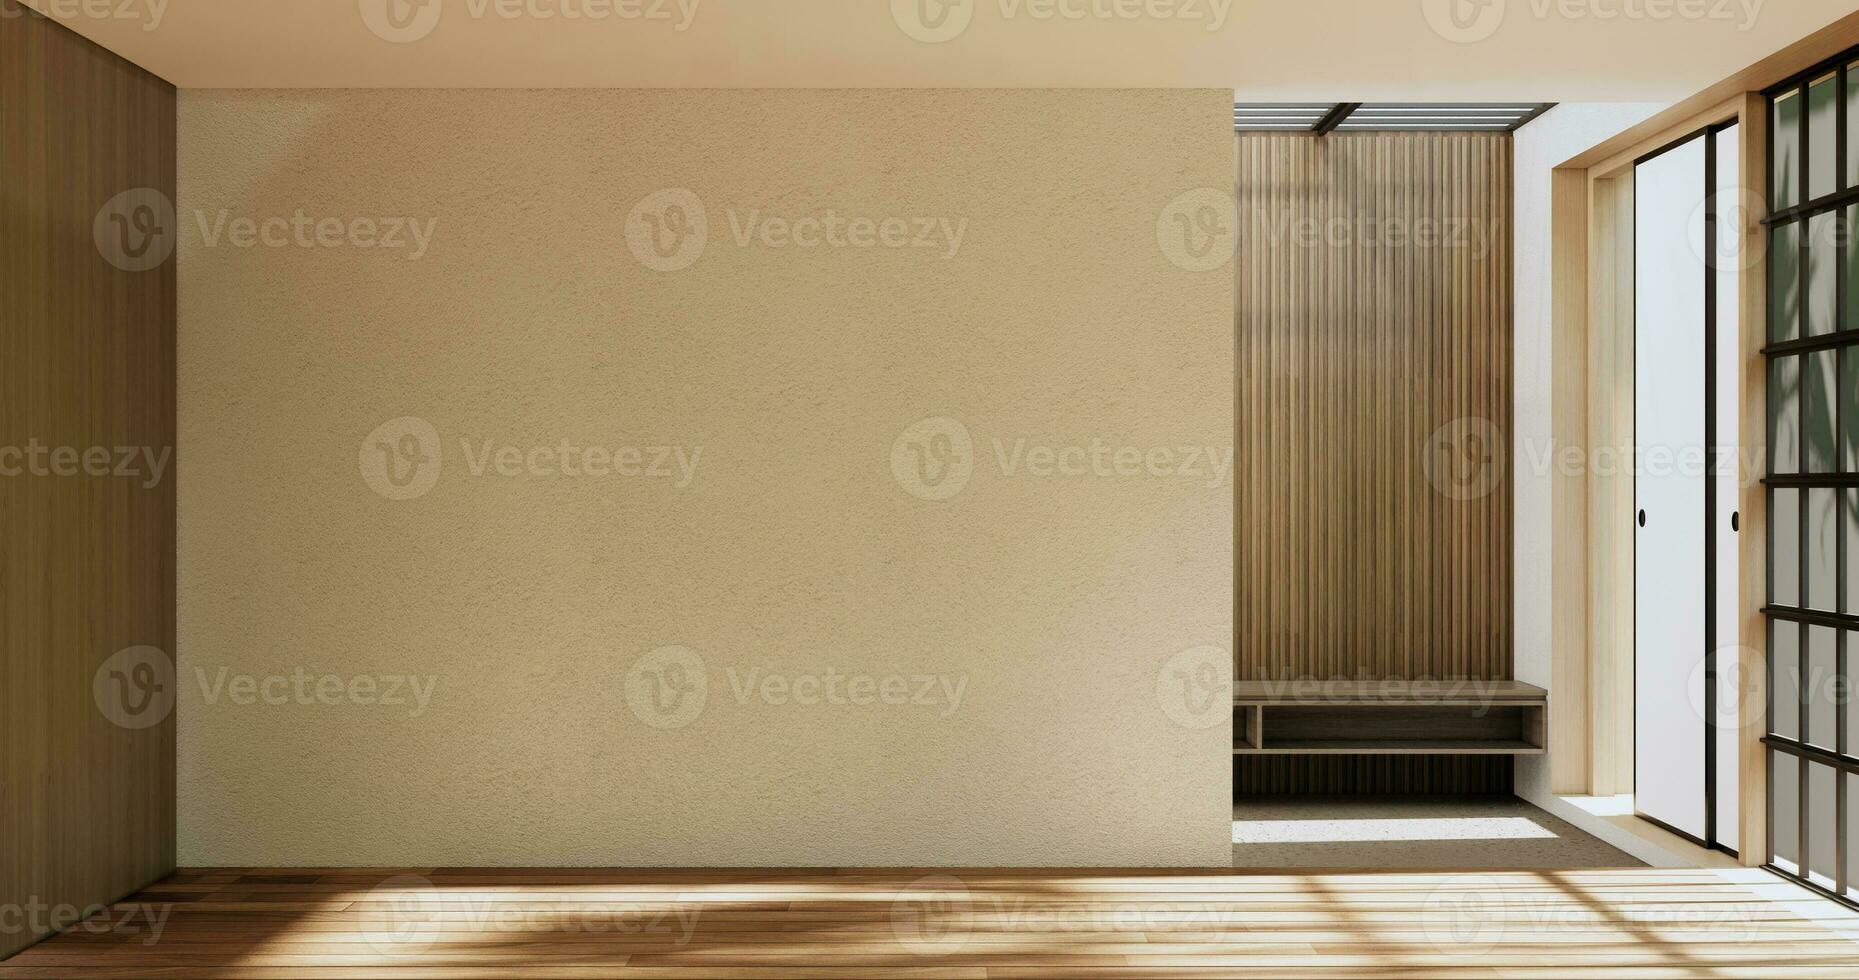 Cabinet room wooden interior wabisabi style.3D rendering photo